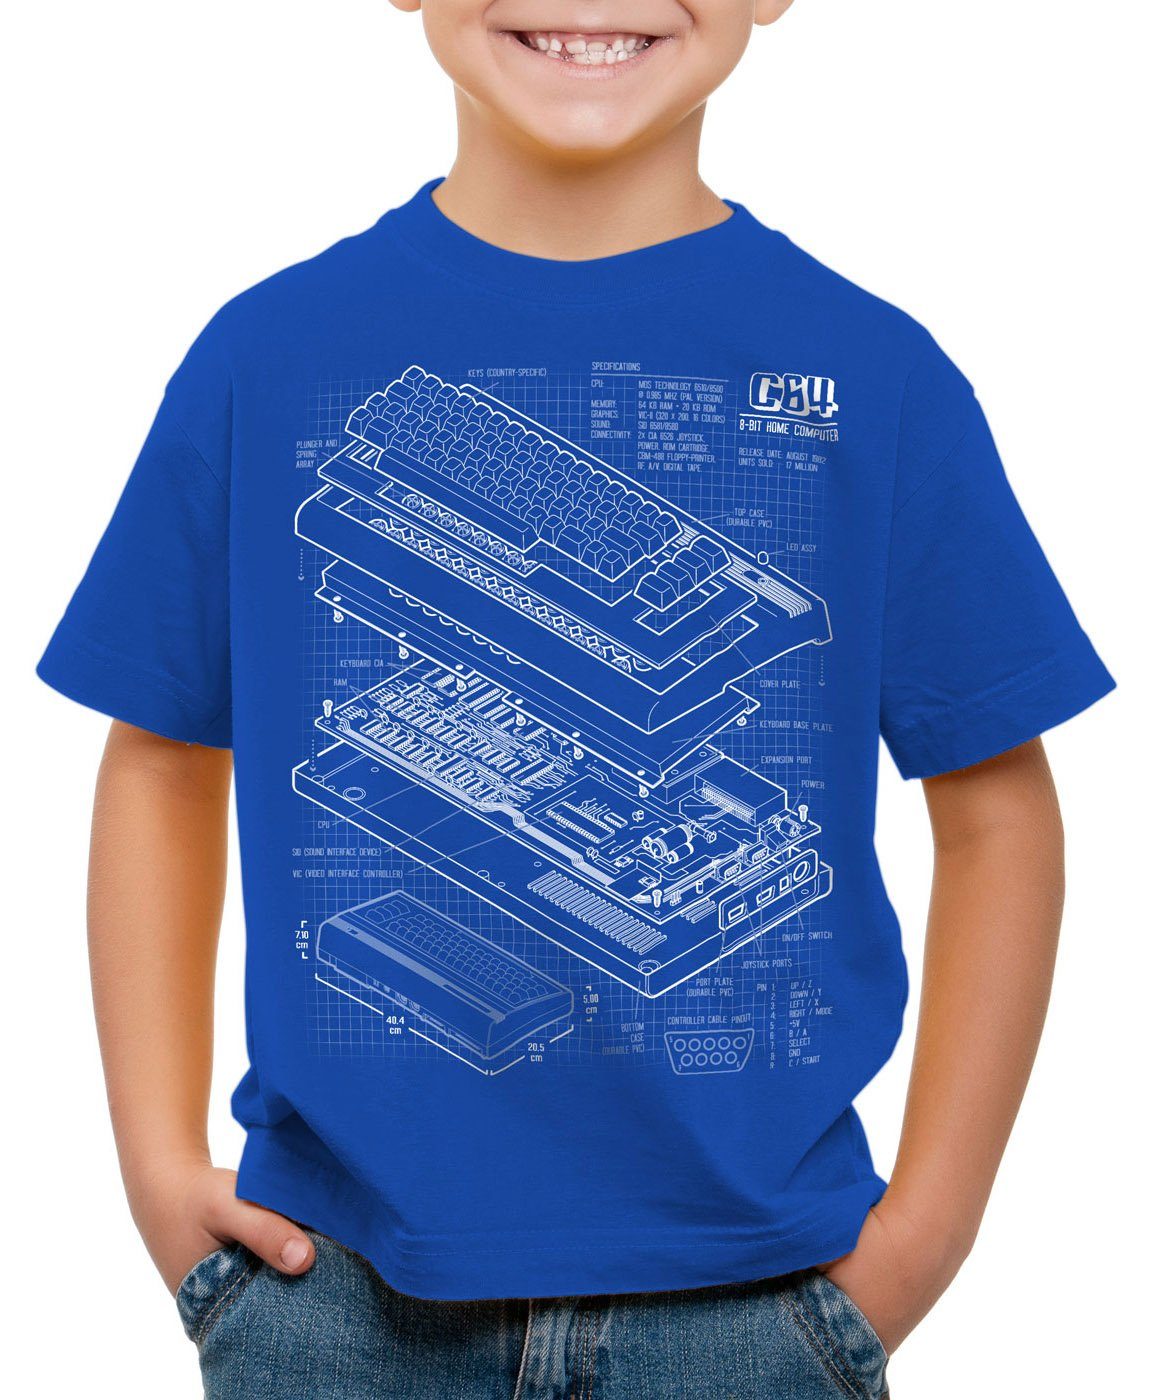 style3 Print-Shirt Kinder T-Shirt C64 Heimcomputer classic gamer blau